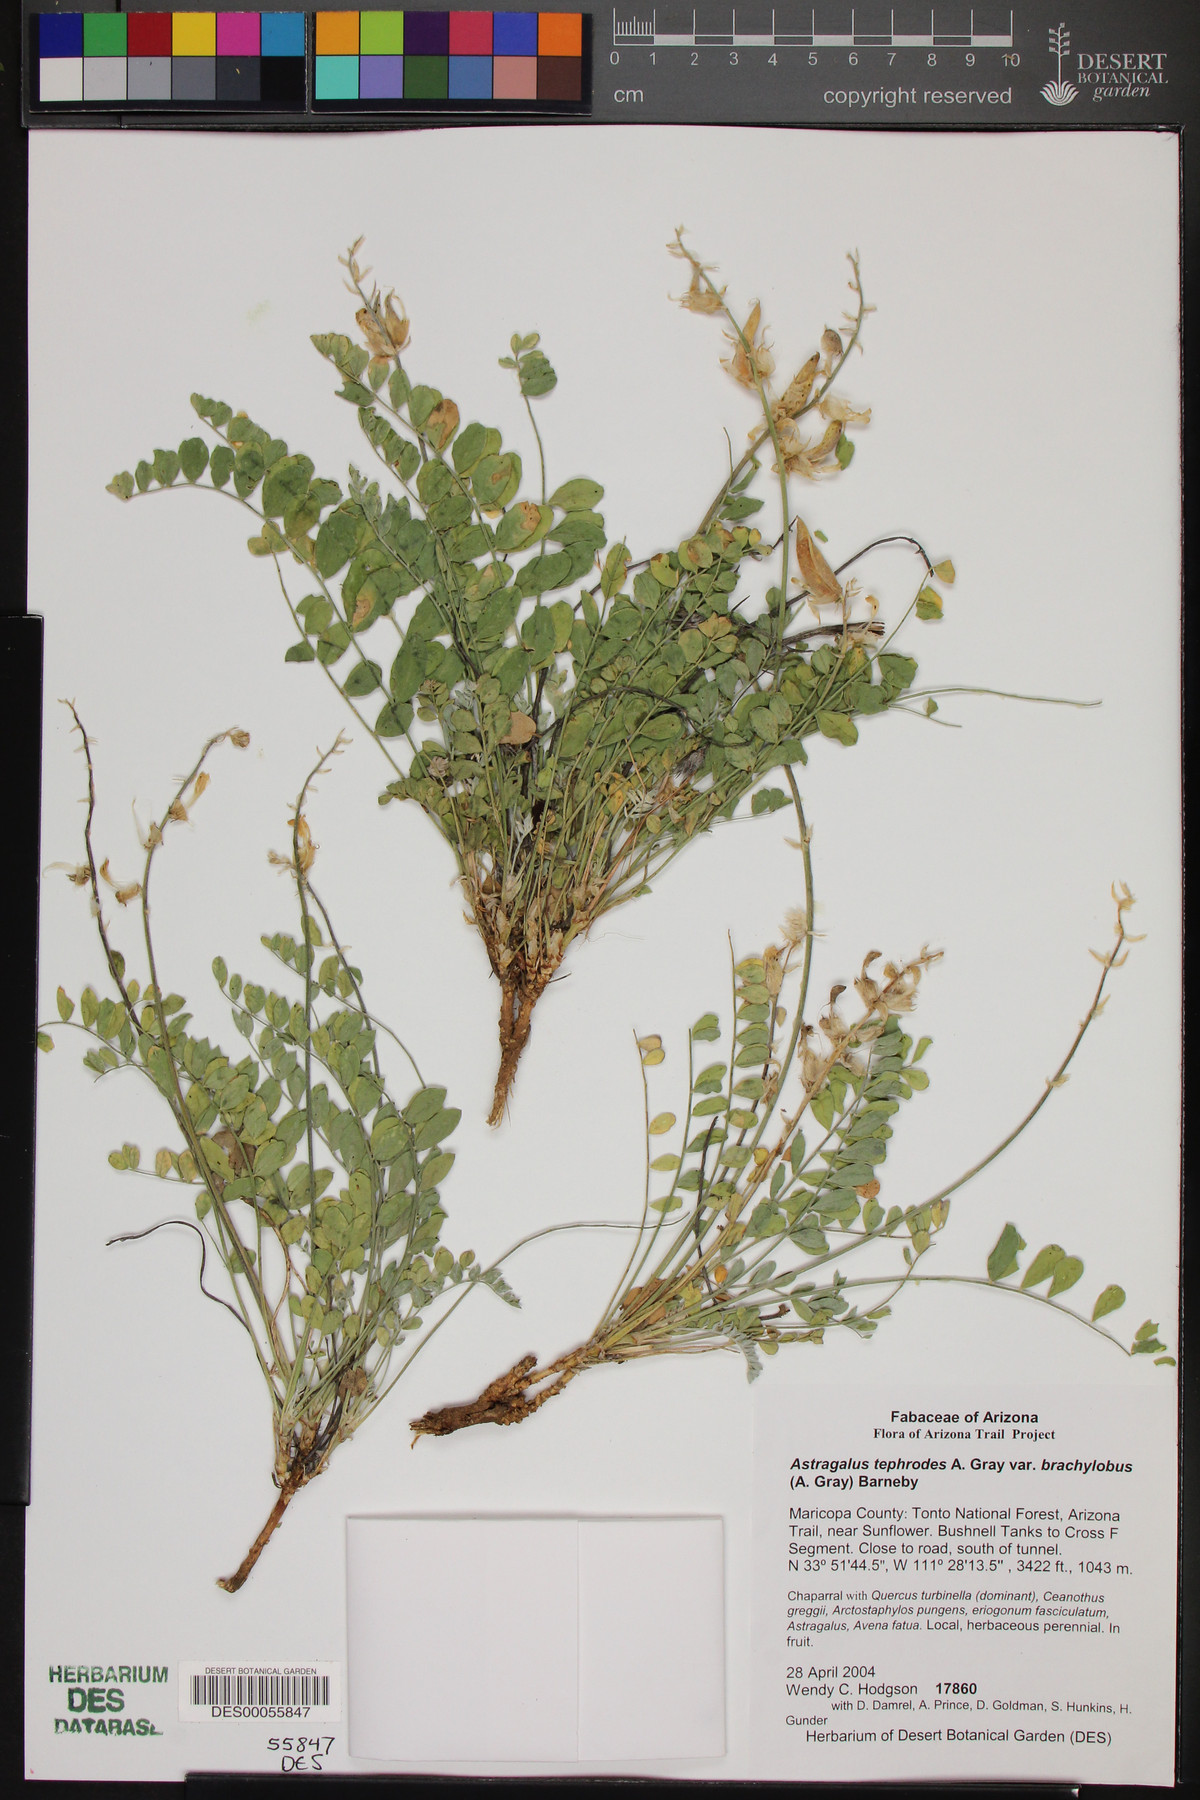 Astragalus tephrodes var. brachylobus image